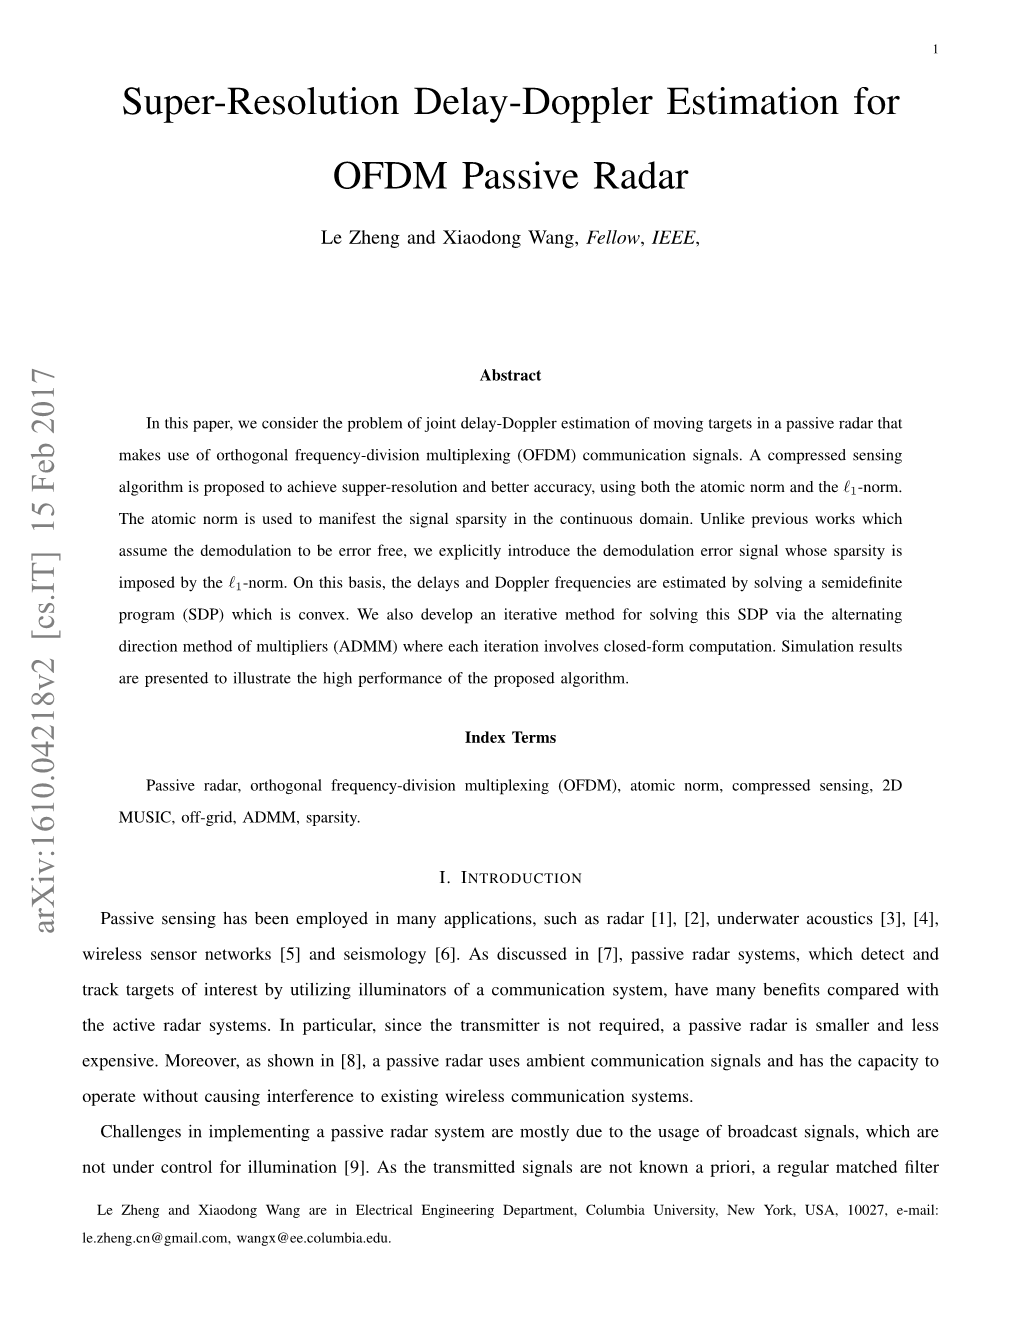 Super-Resolution Delay-Doppler Estimation for OFDM Passive Radar